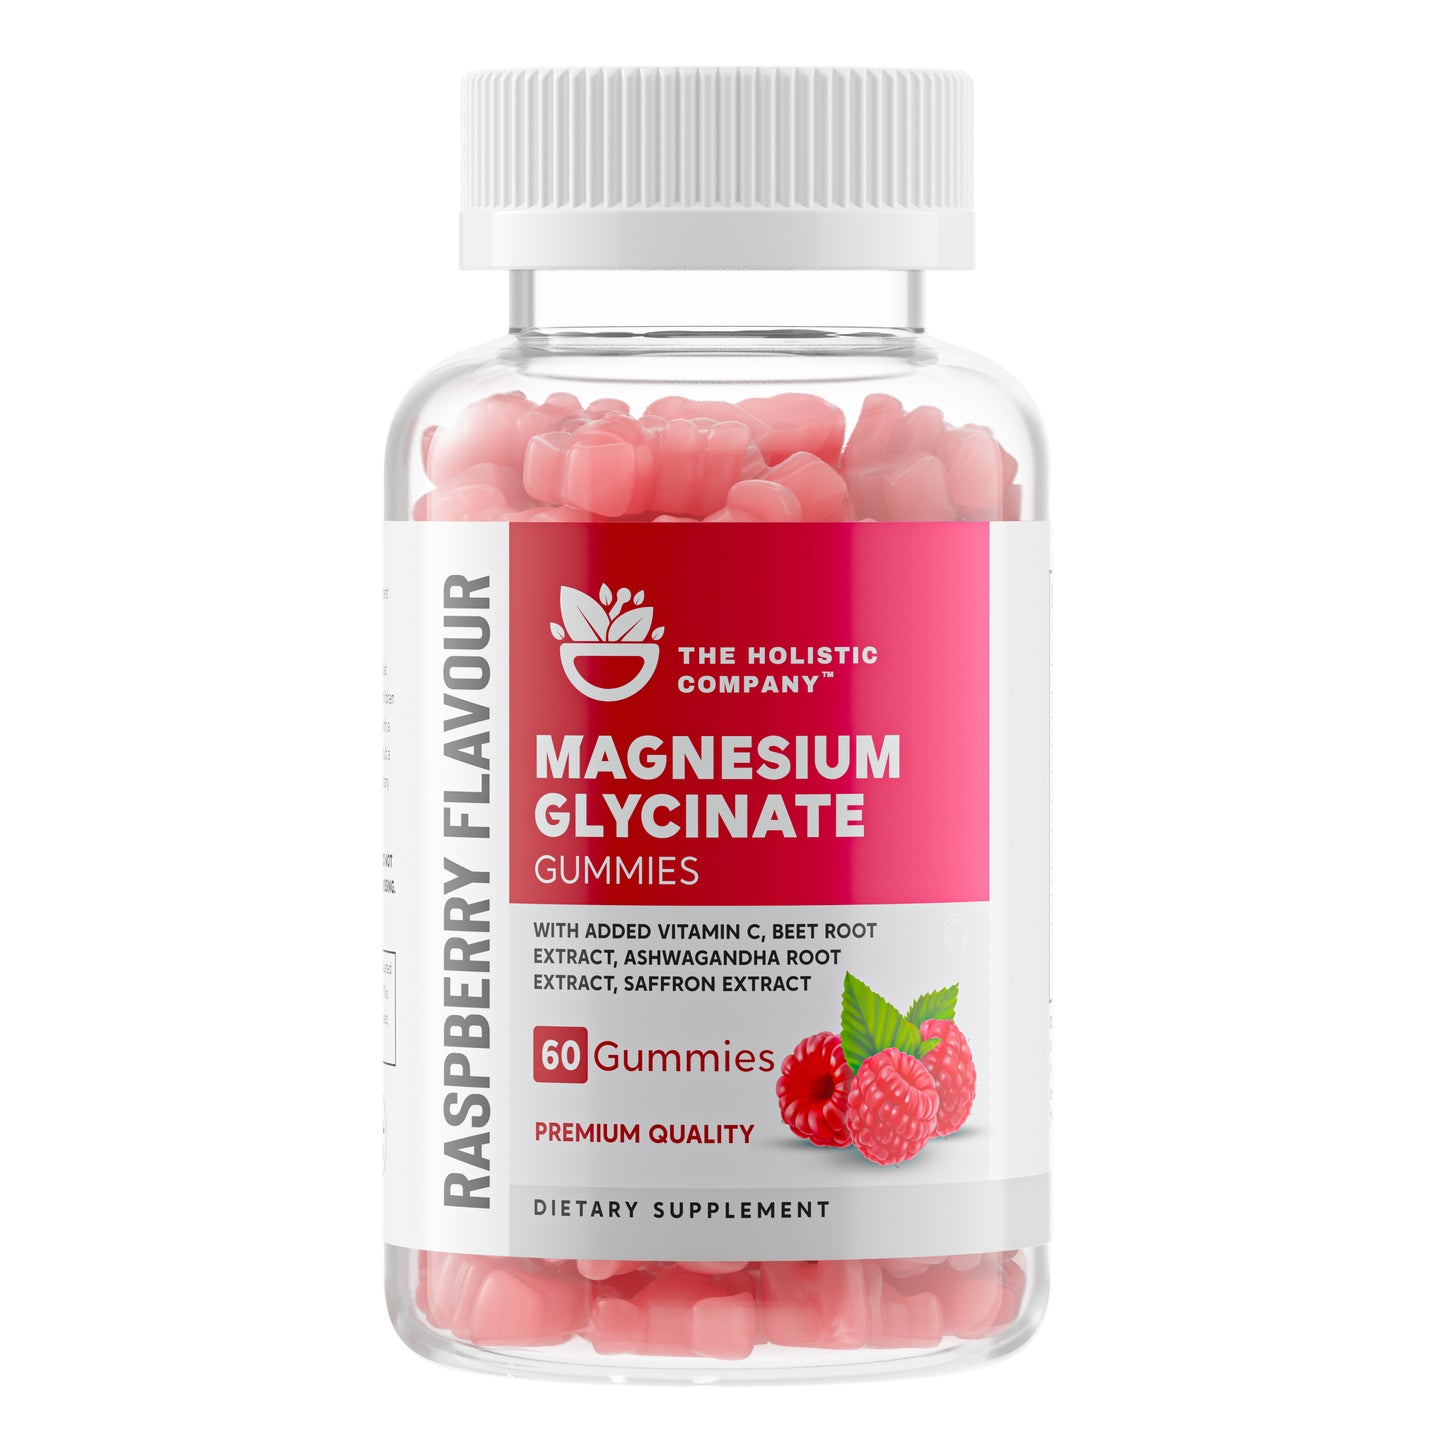 The Holistic Company Magnesium Glycinate Gummies